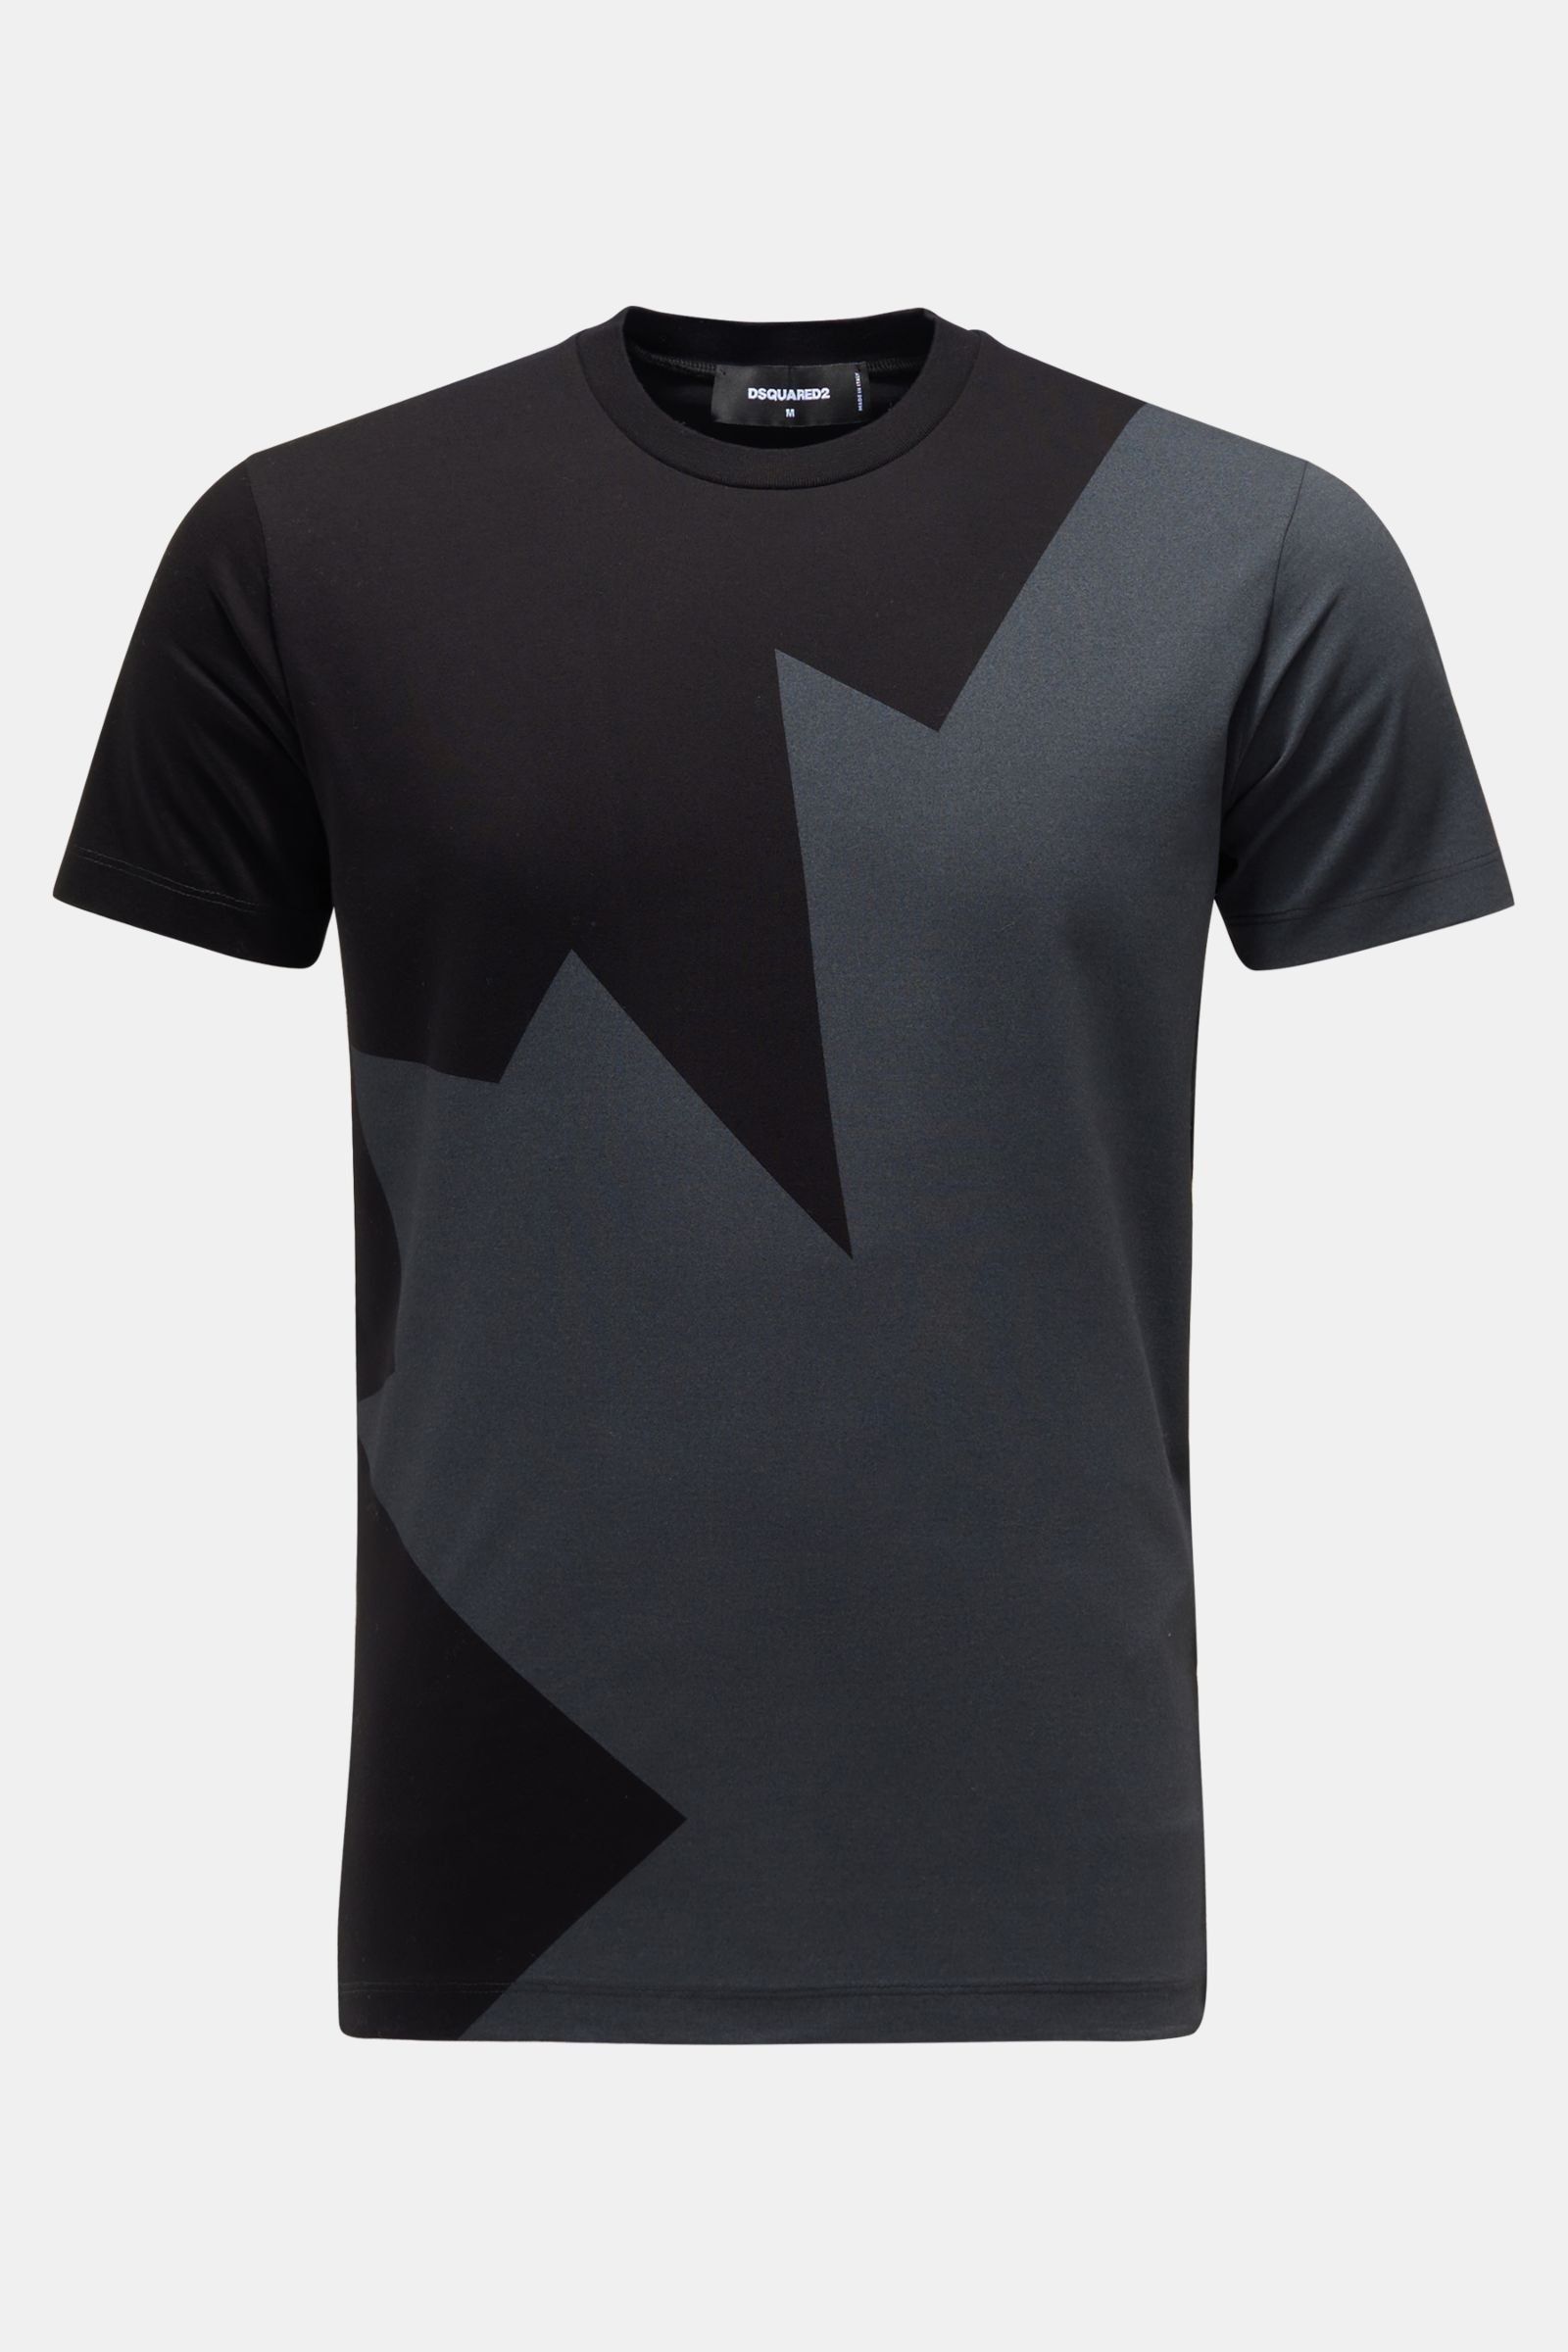 Crew neck T-shirt black/dark grey